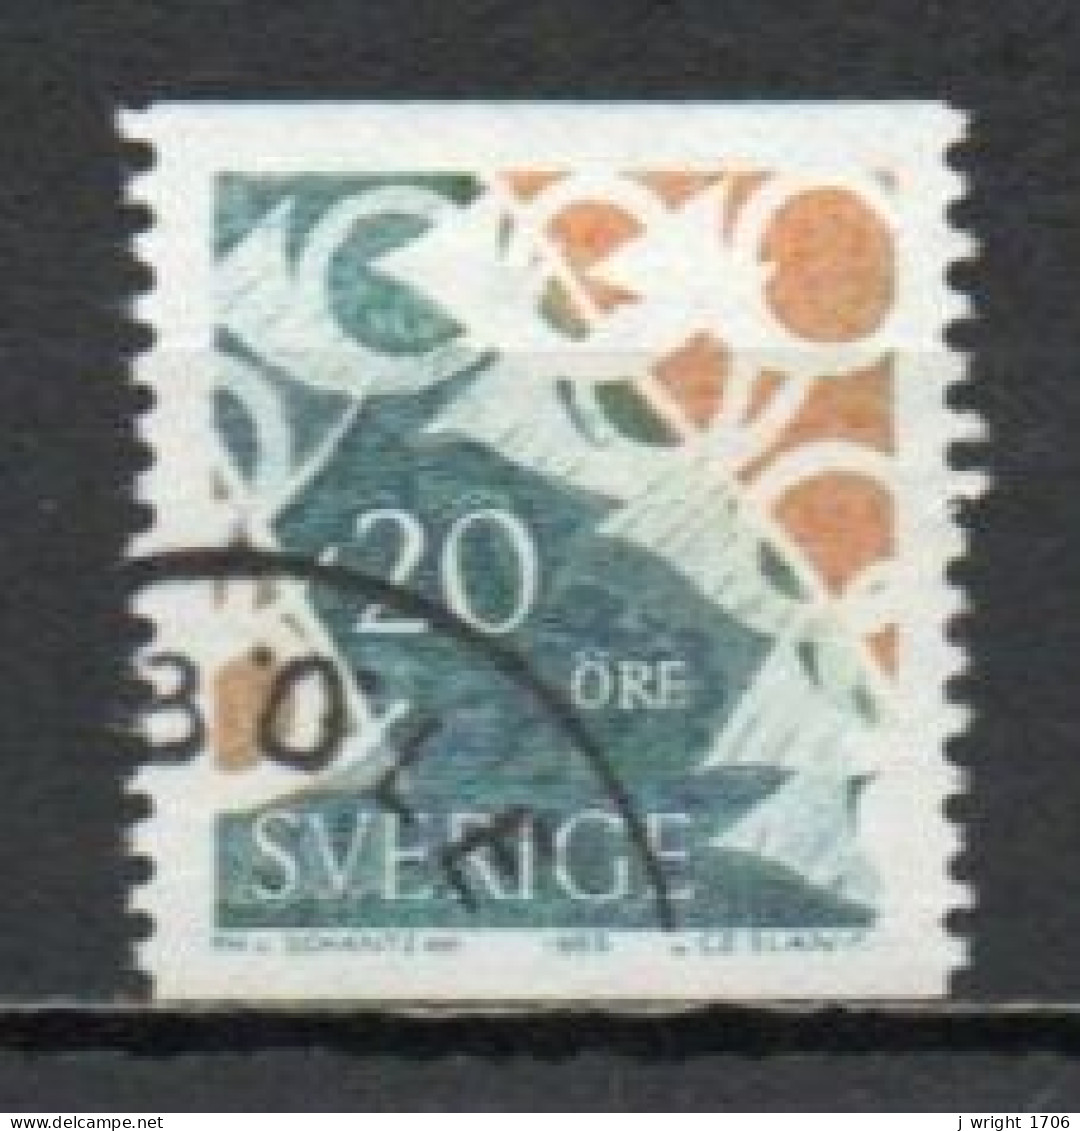 Sweden, 1965, Posthorn, 20ö, USED - Usati